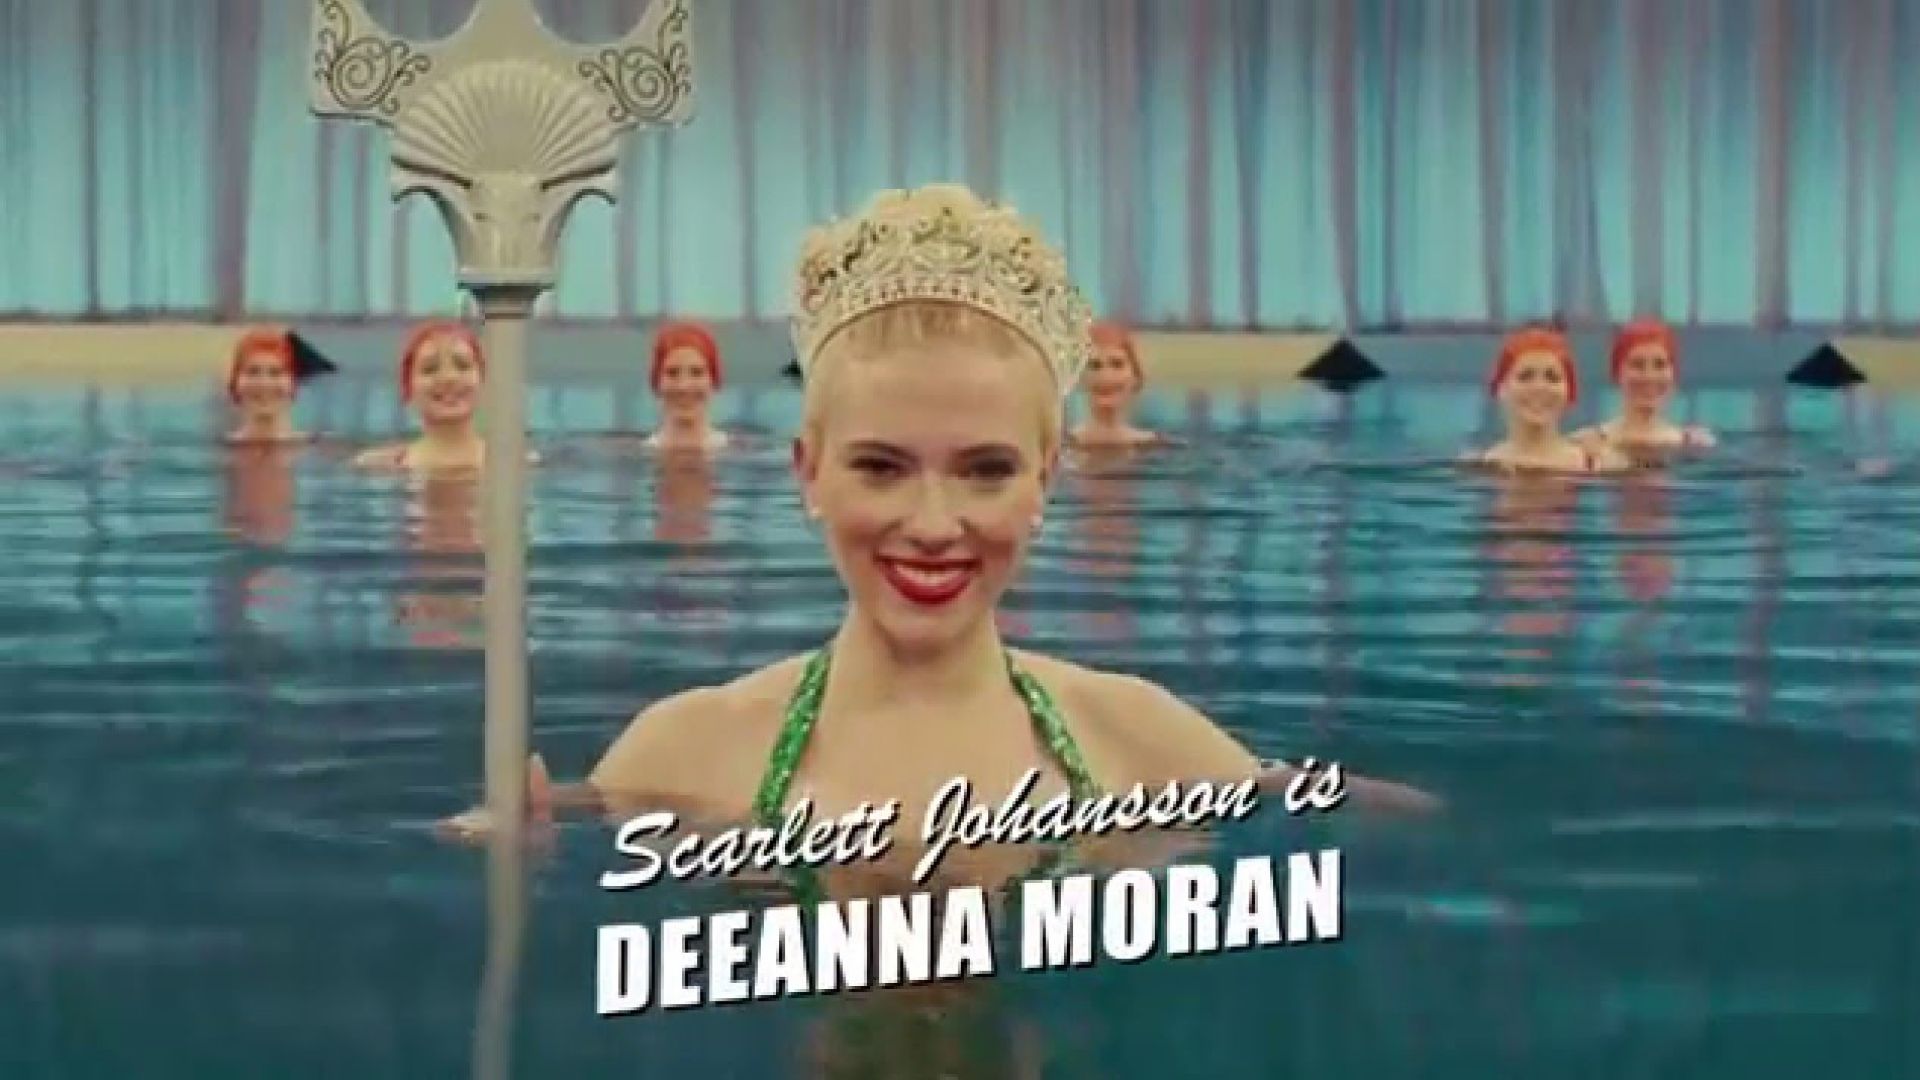 Hail, Caesar! Scarlett Johansson Is Deeanna Moran